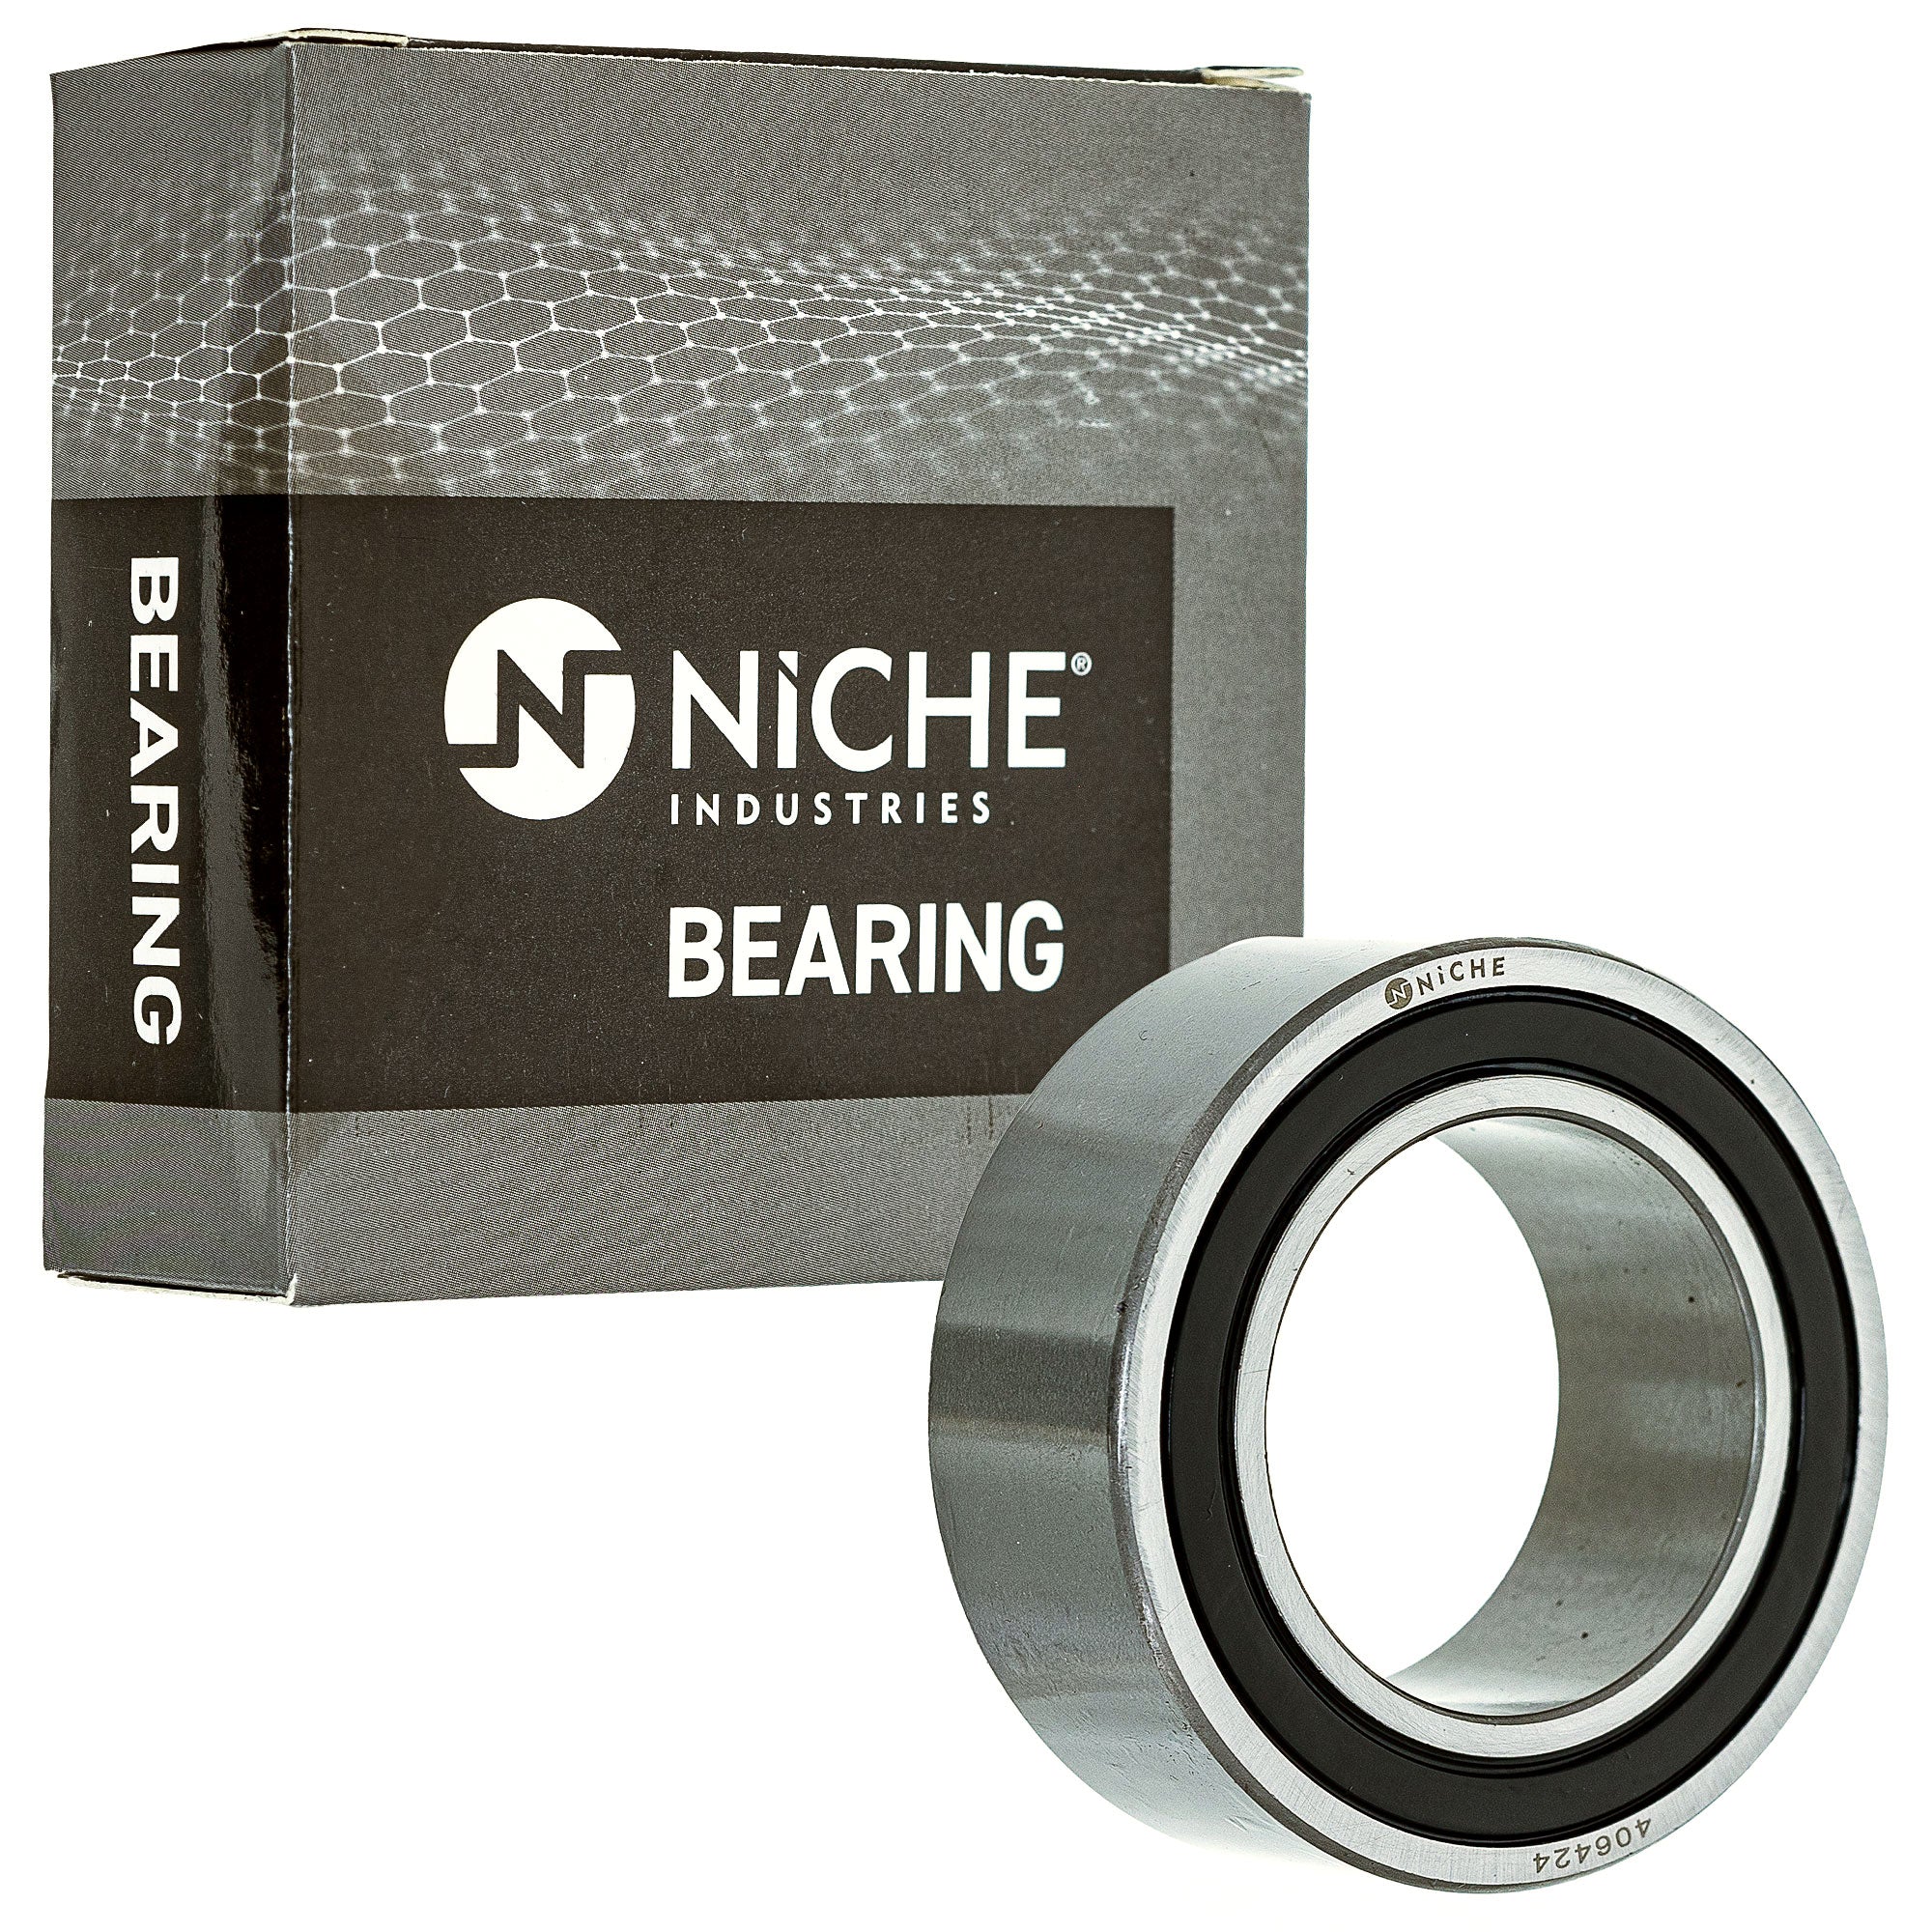 NICHE 519-CBB2205R Bearing 10-Pack for zOTHER YFZ450XSE YFZ450X